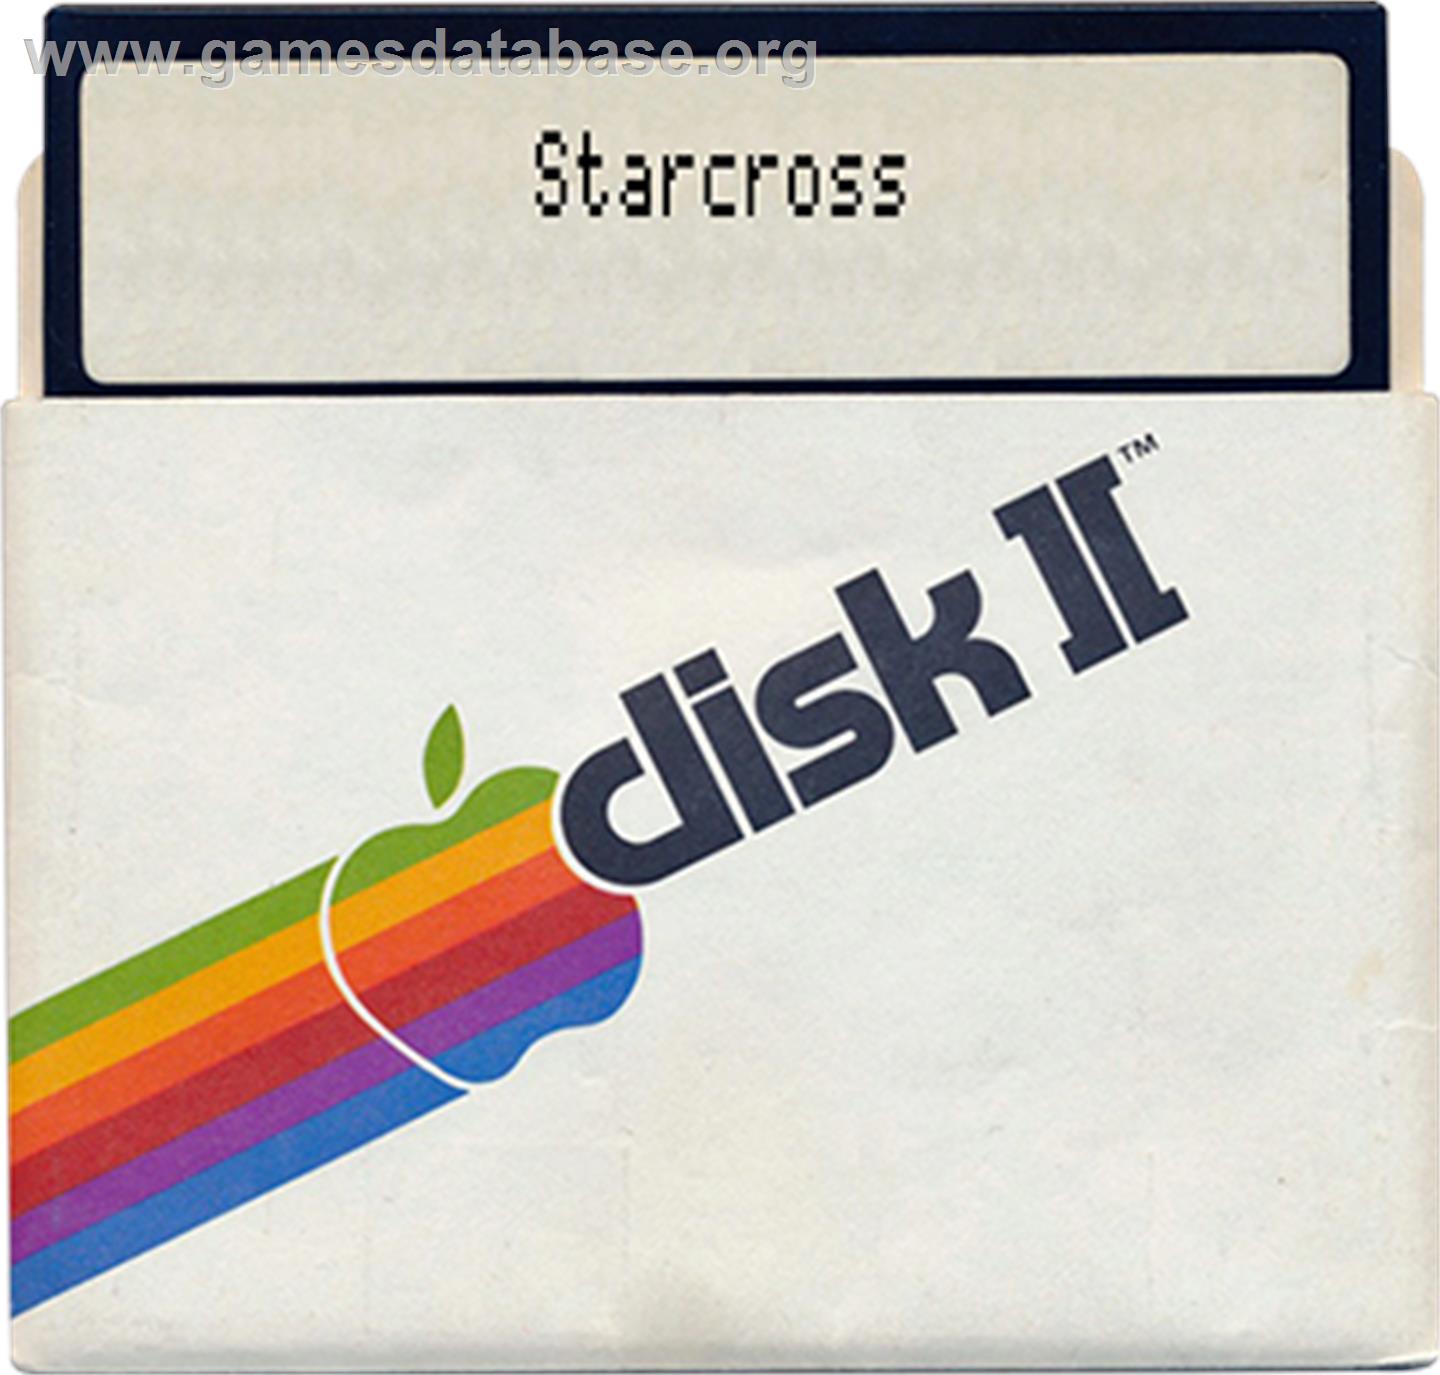 Starcross - Apple II - Artwork - Disc